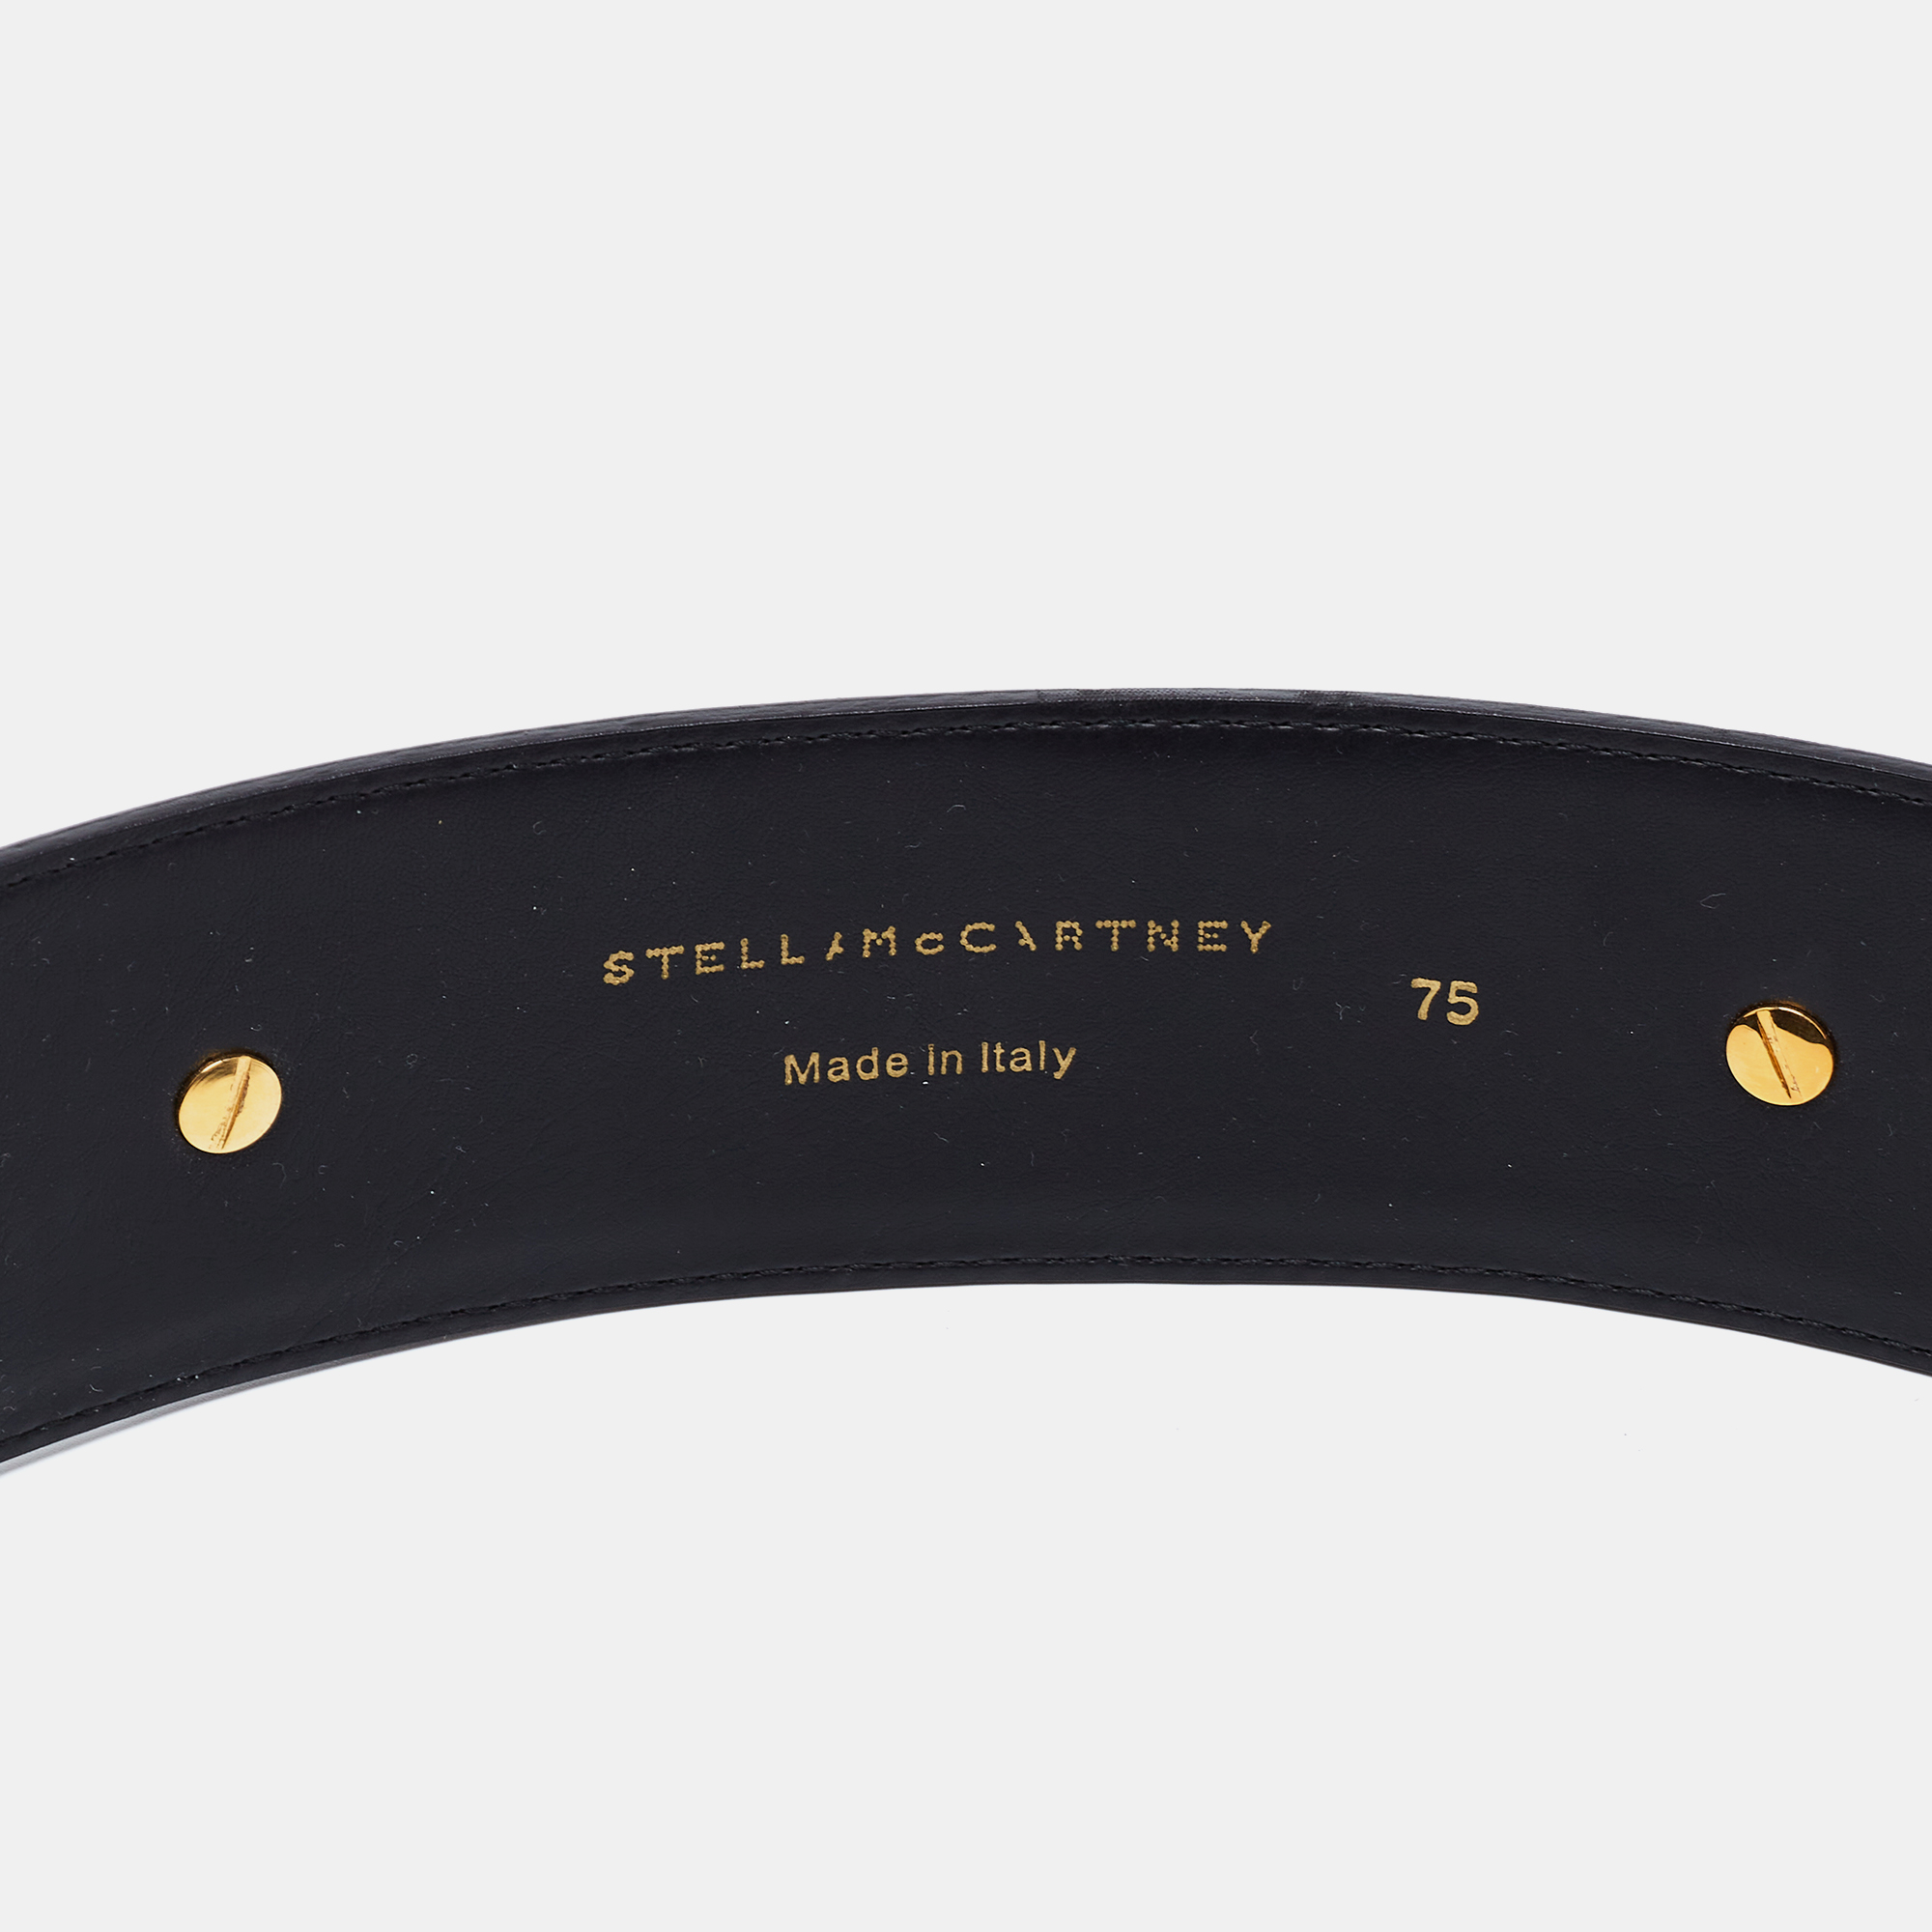 Stella McCartney Black Faux Leather Gold Tone Metal Plate Waist Belt 75 CM